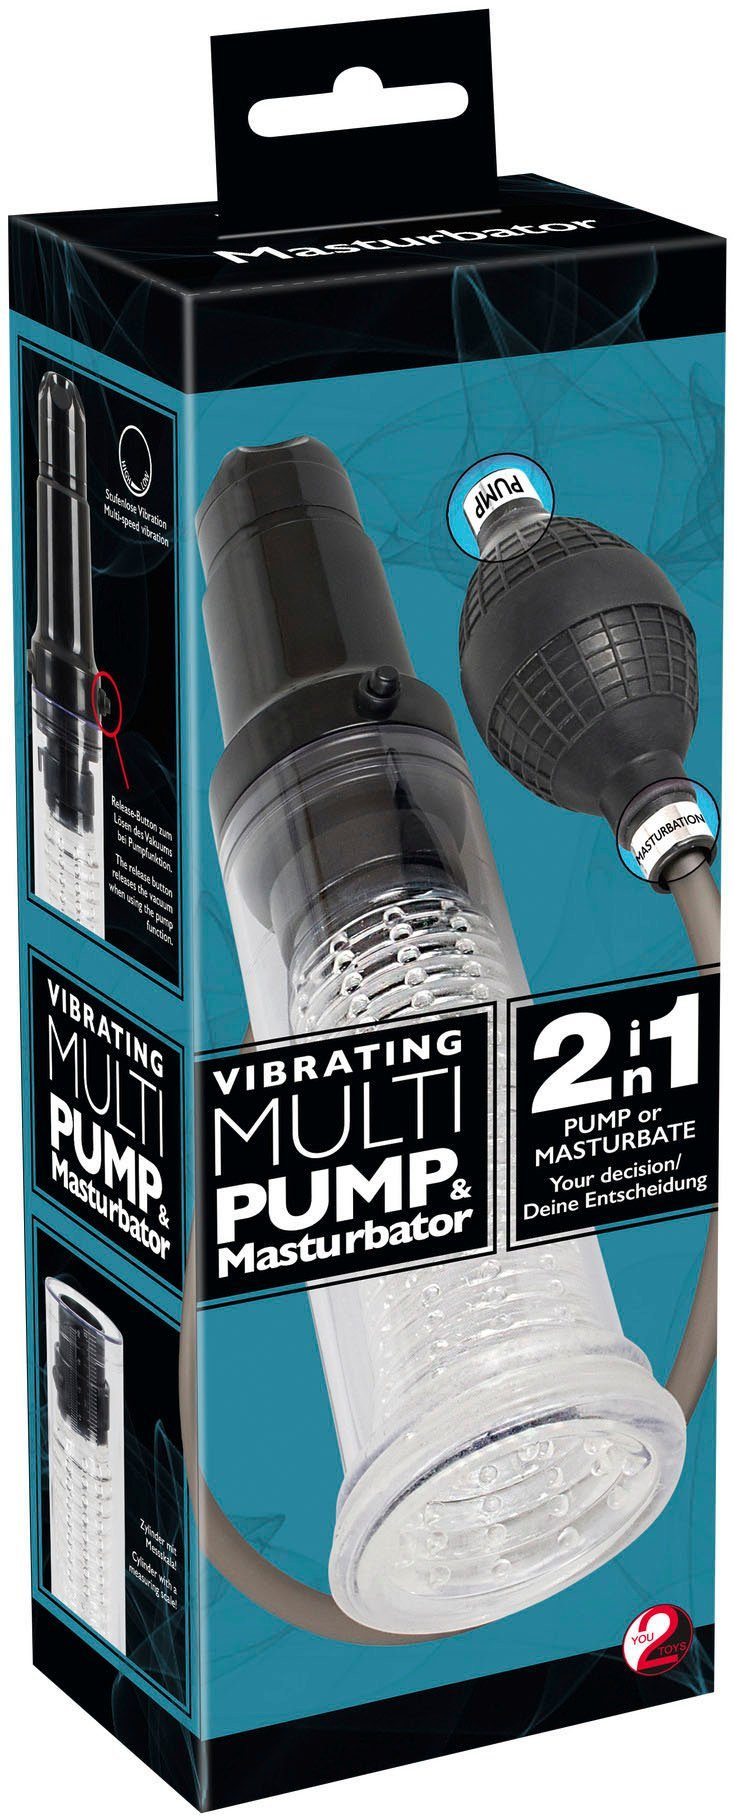 & Penis-Ballhandpumpe Pump Masturbator Multi Vibrating You2Toys